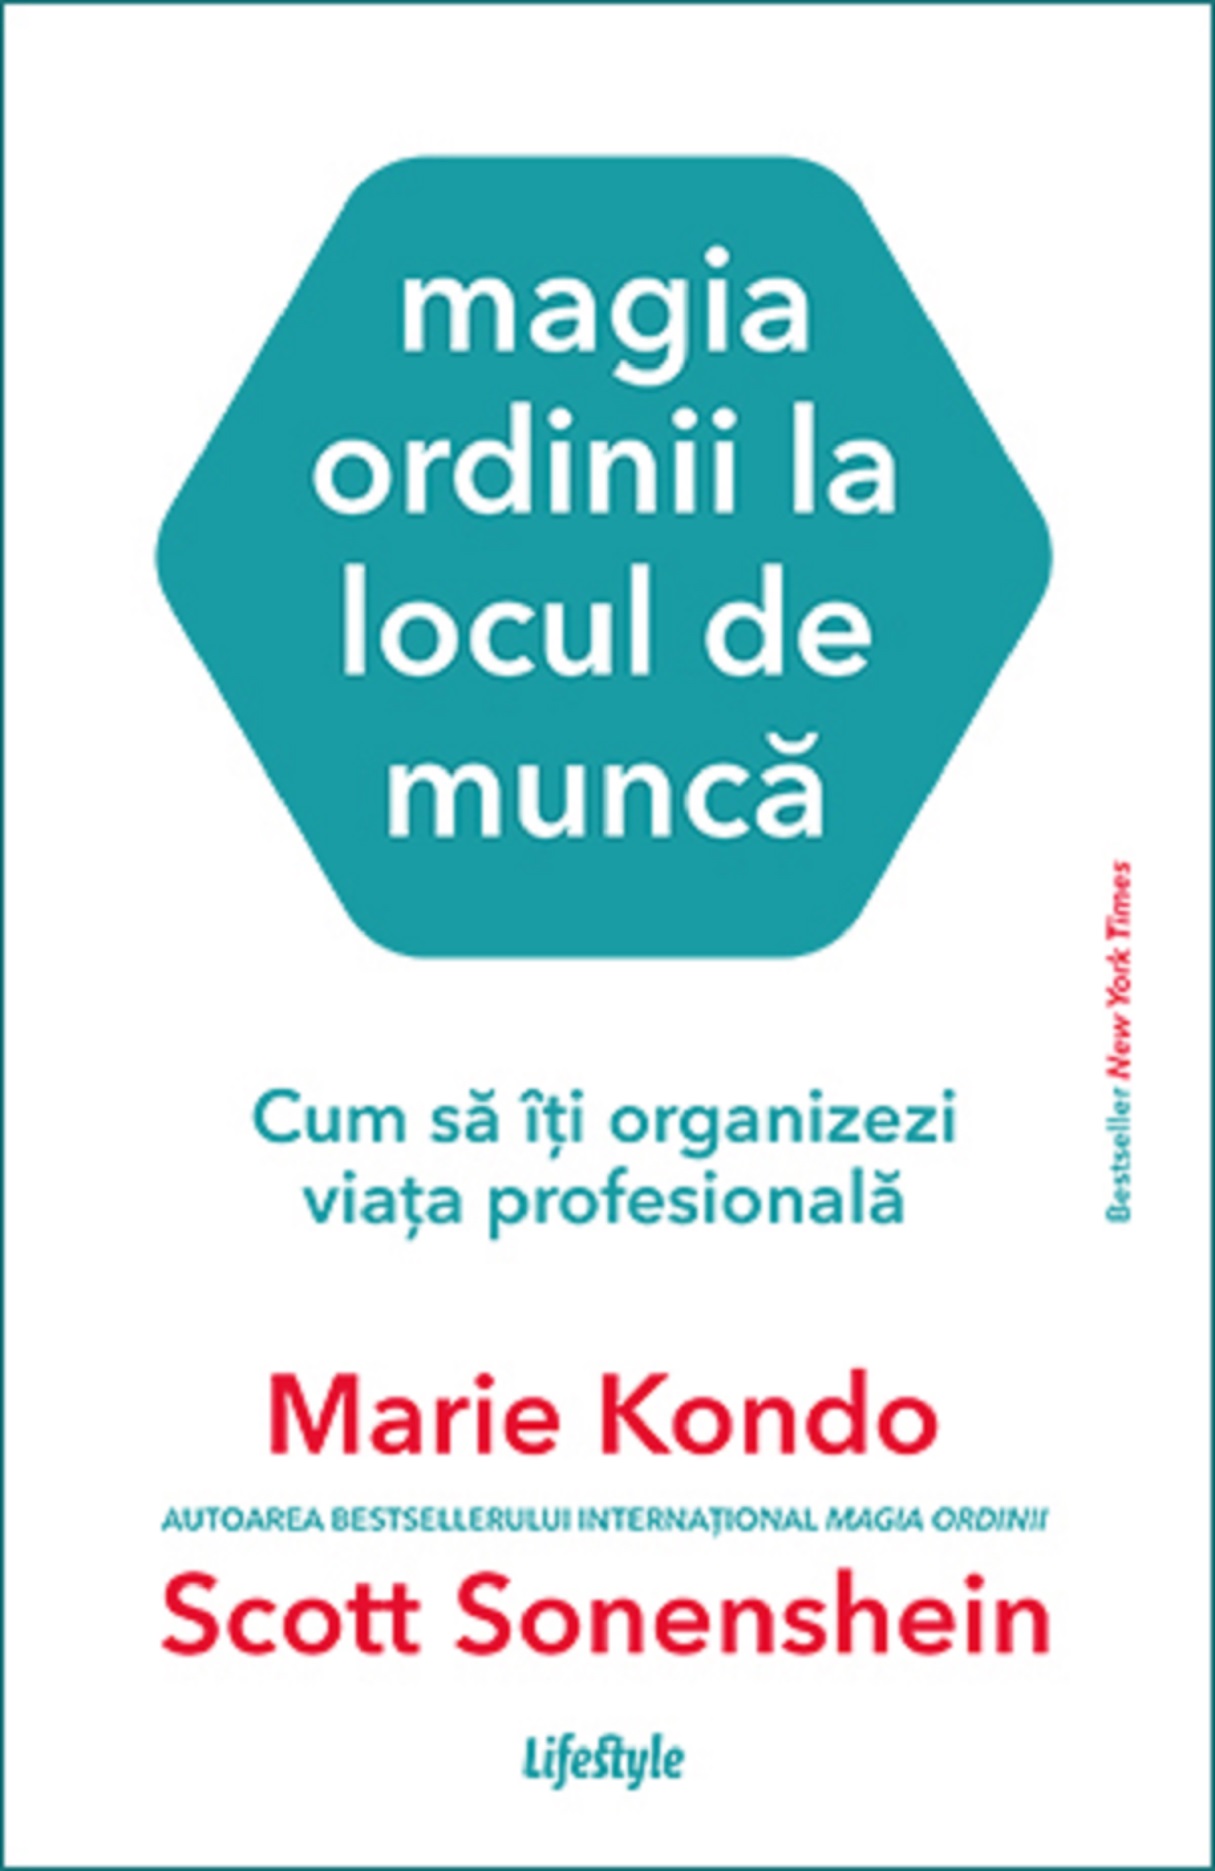 Magia ordinii la locul de munca | Marie Kondo carturesti.ro Business si economie